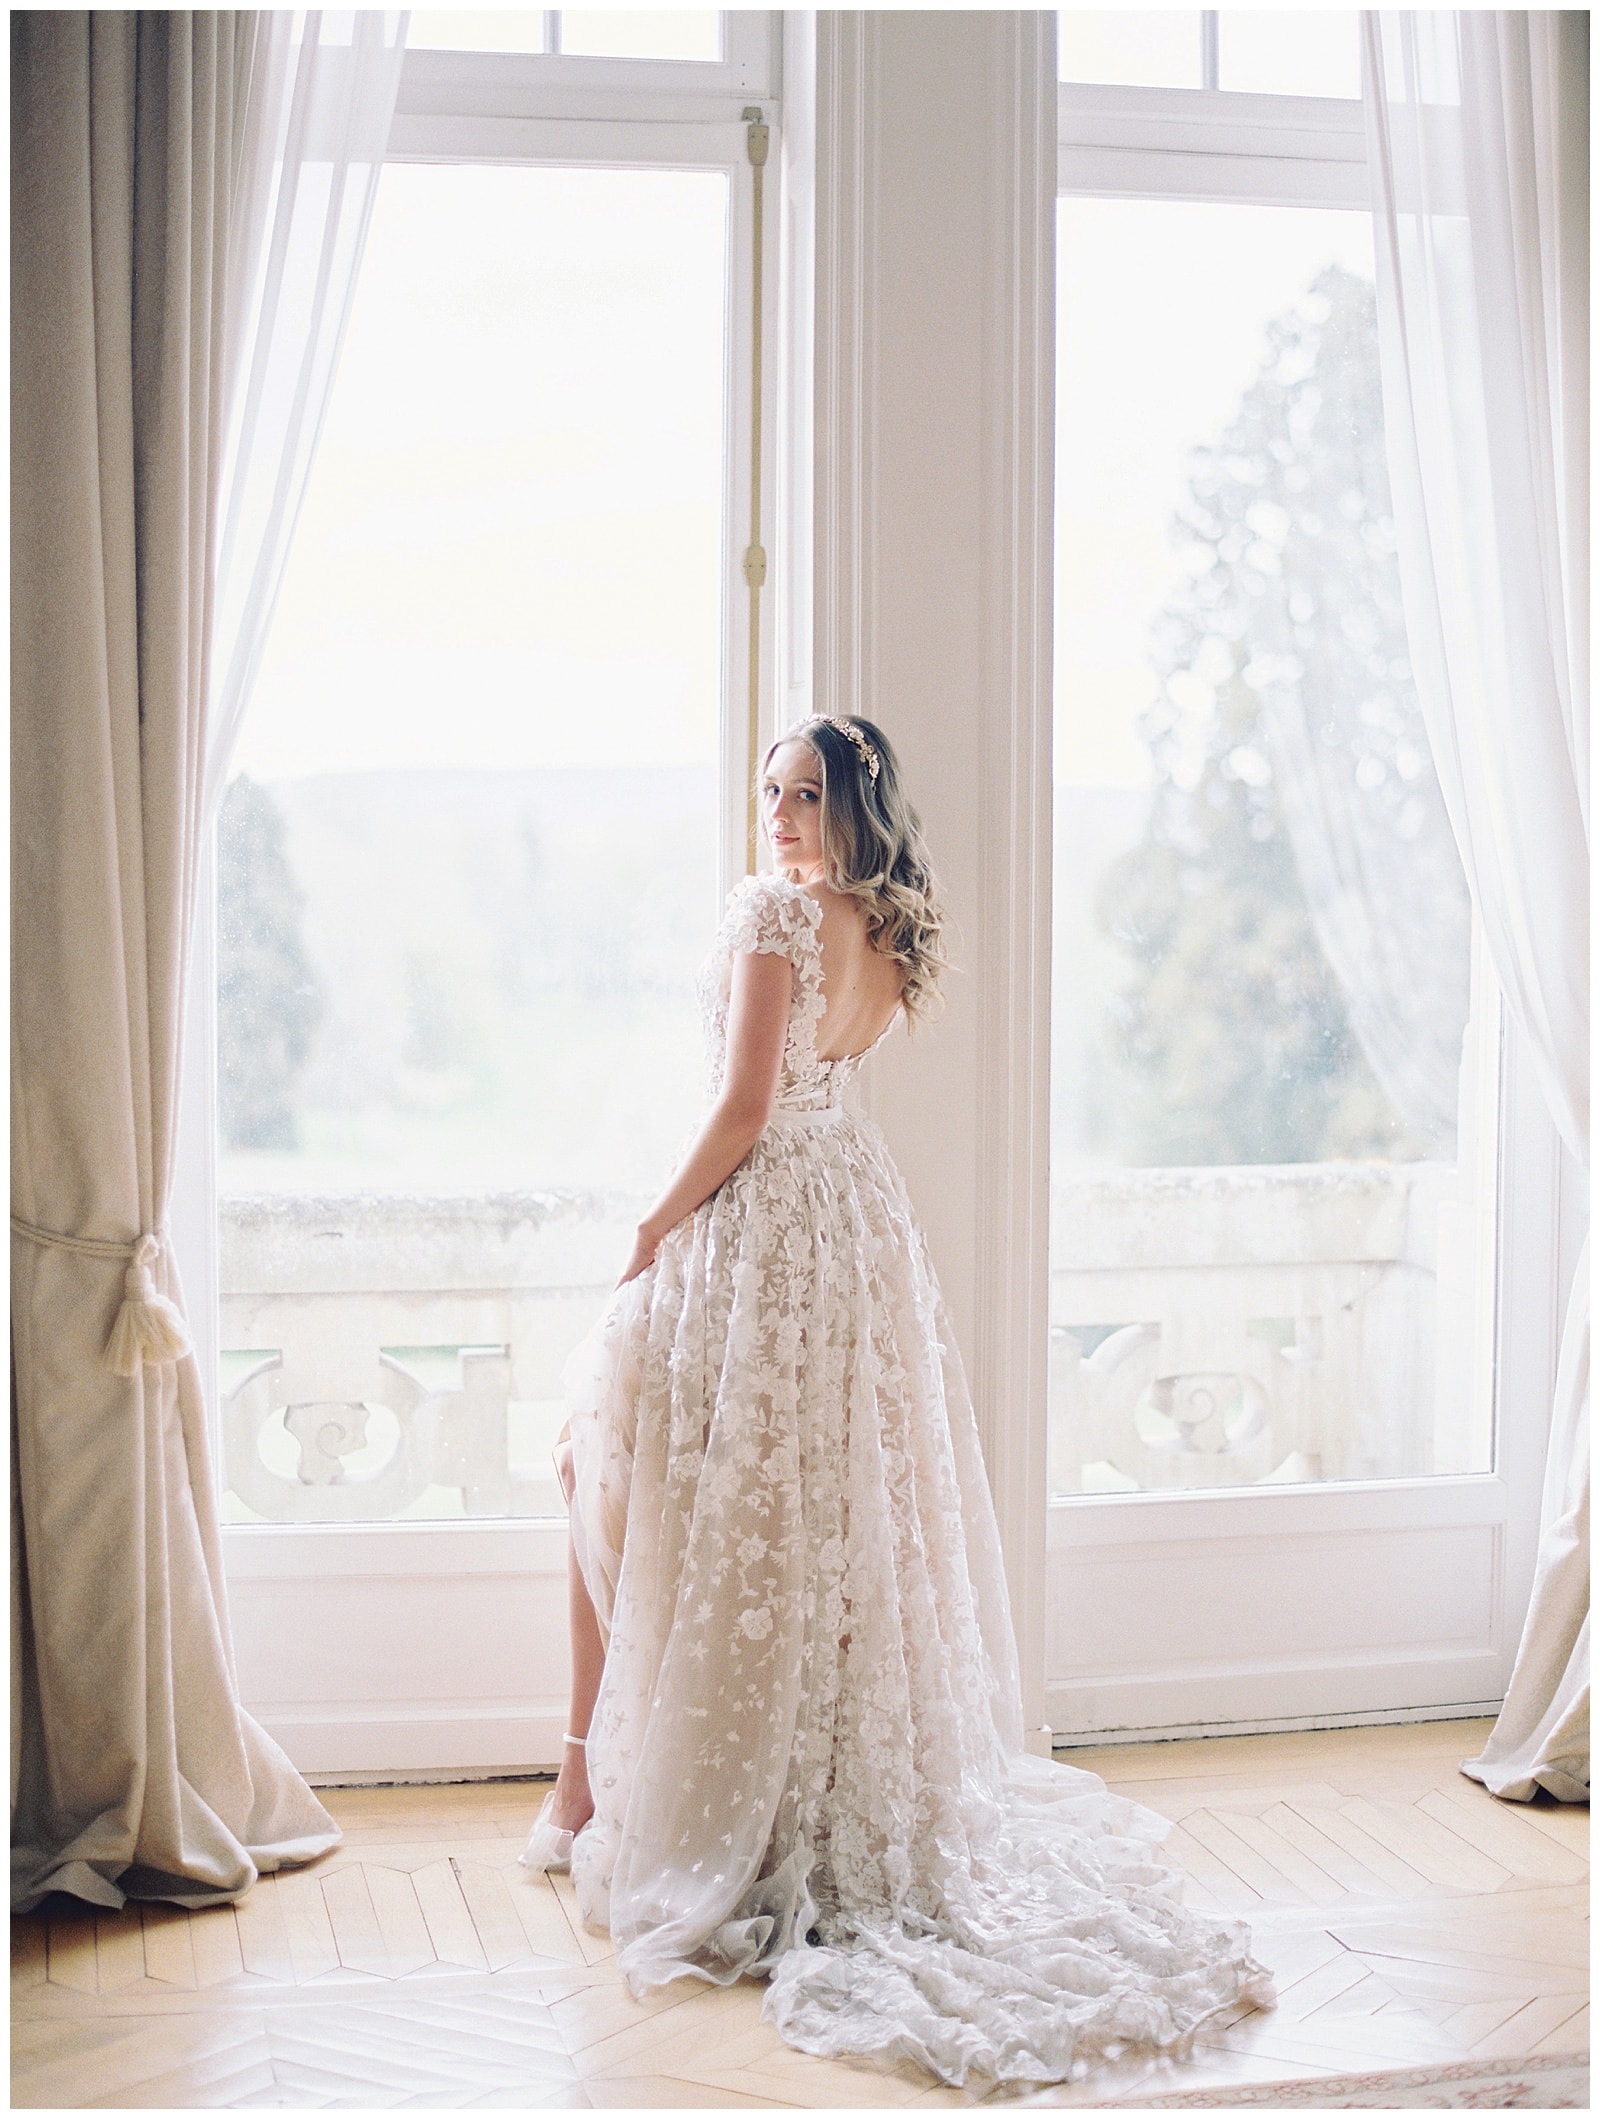 Danielle-Defayette-Photography-Chateau-Bouffemont-Wedding-Paris_0002.jpg